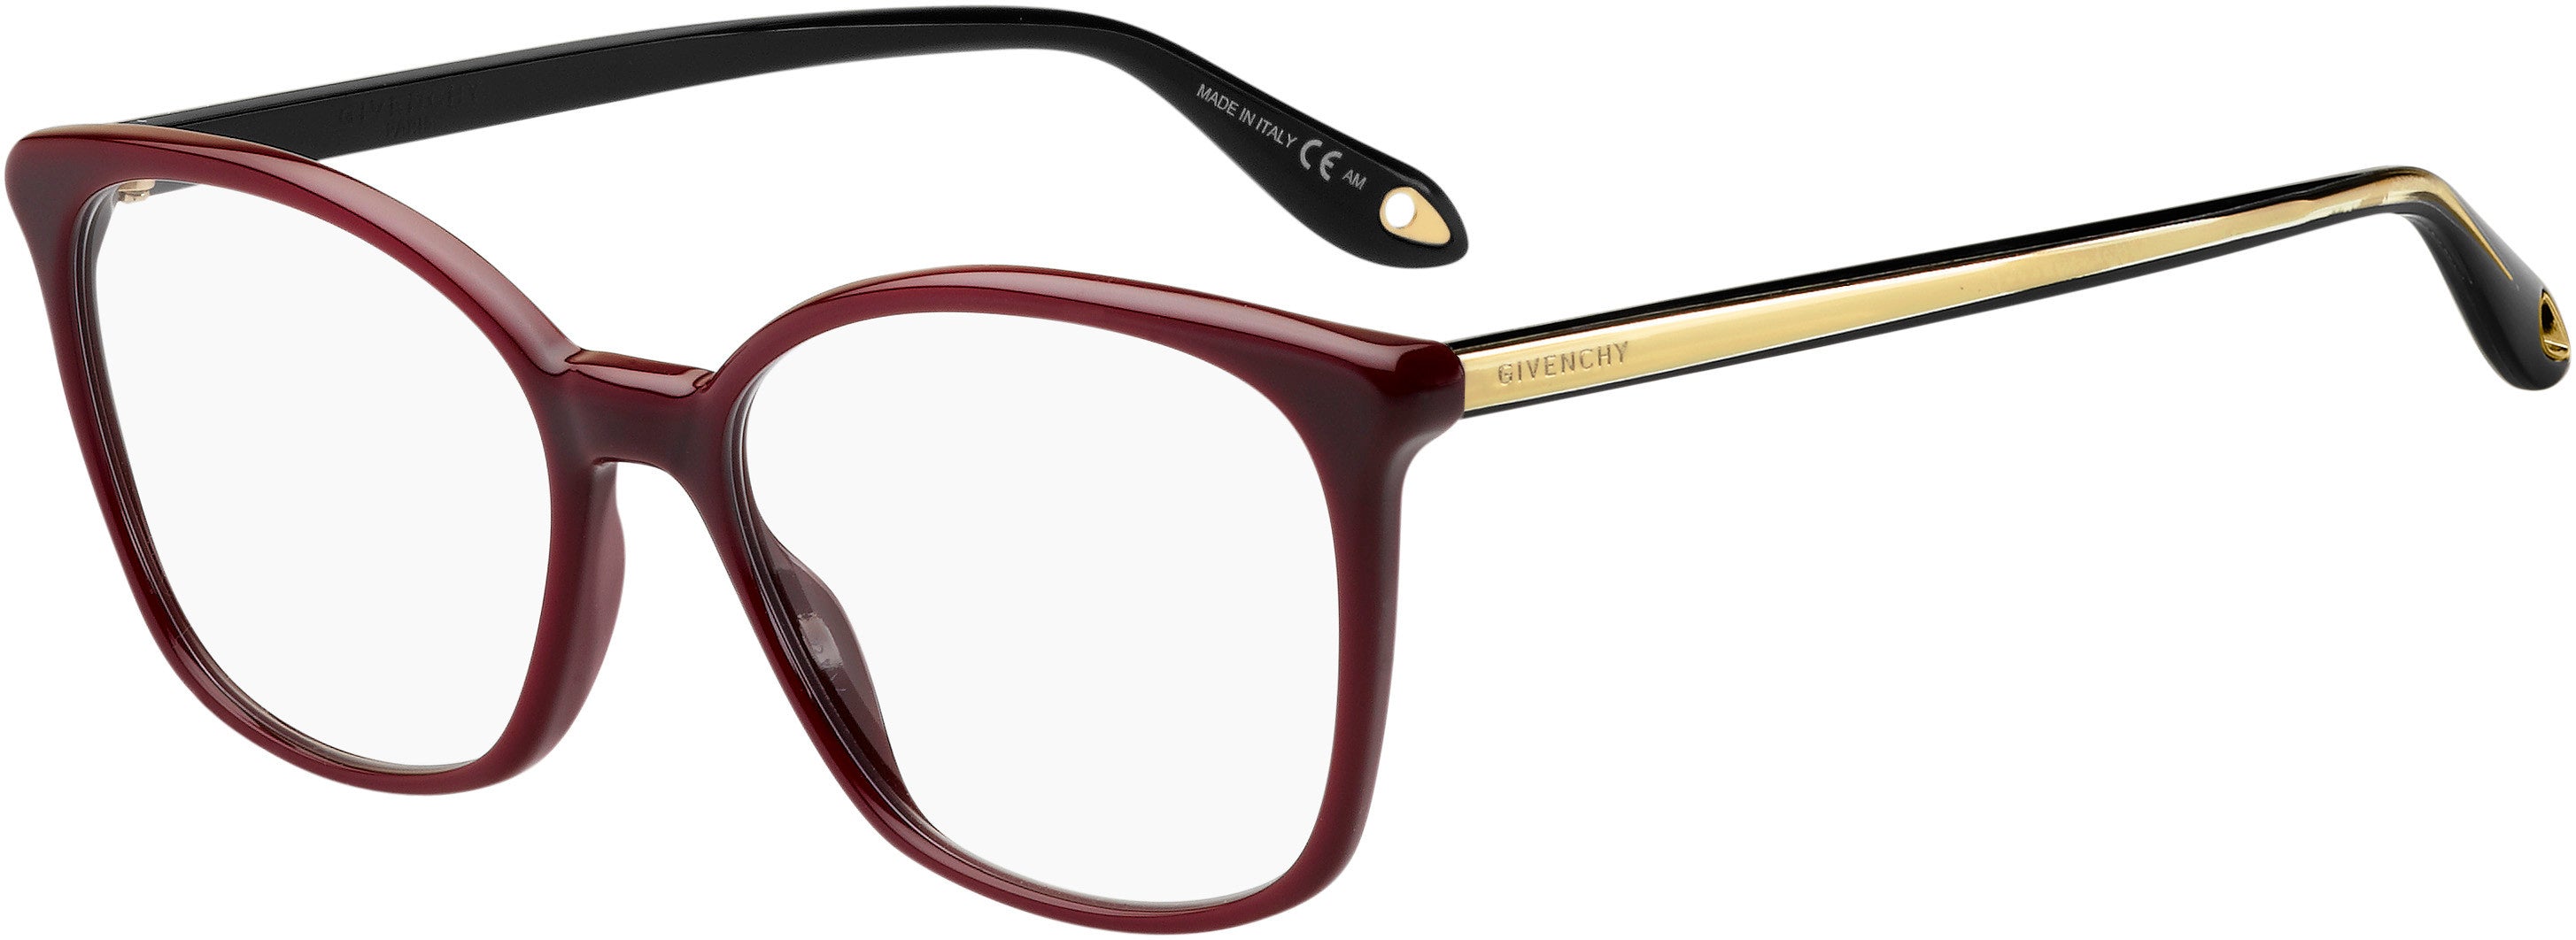  Givenchy 0073 Square Eyeglasses 0C9A-0C9A  Red (00 Demo Lens)